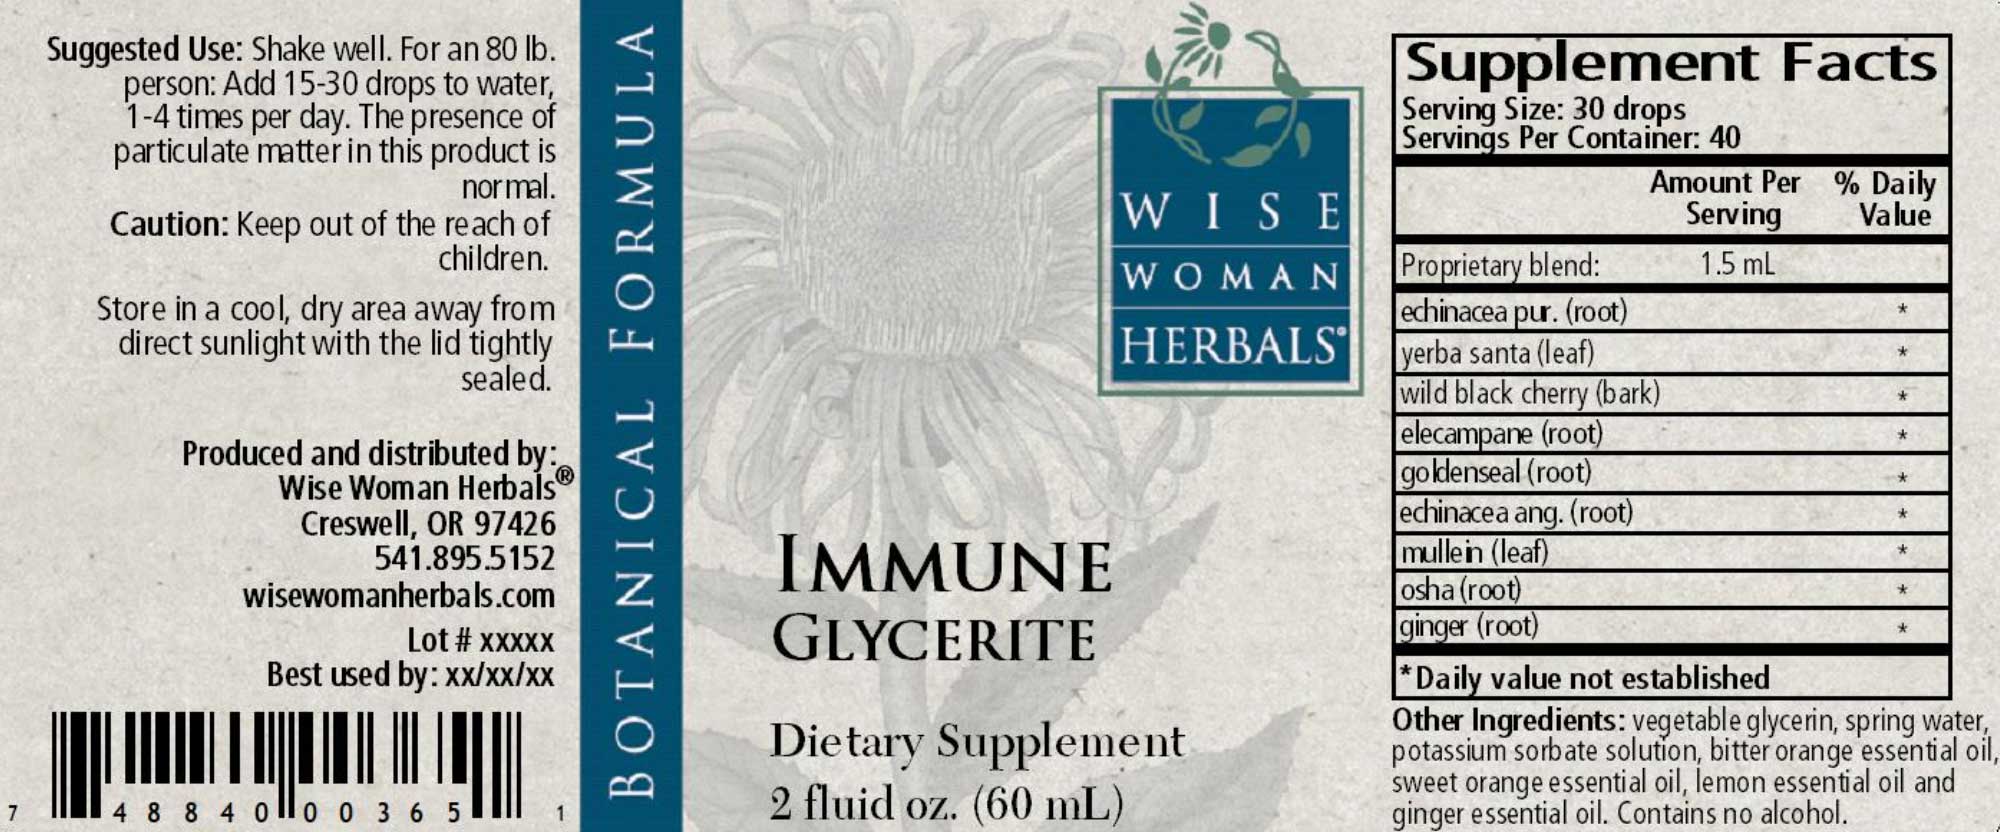 Wise Woman Herbals Immune Glycerite Label